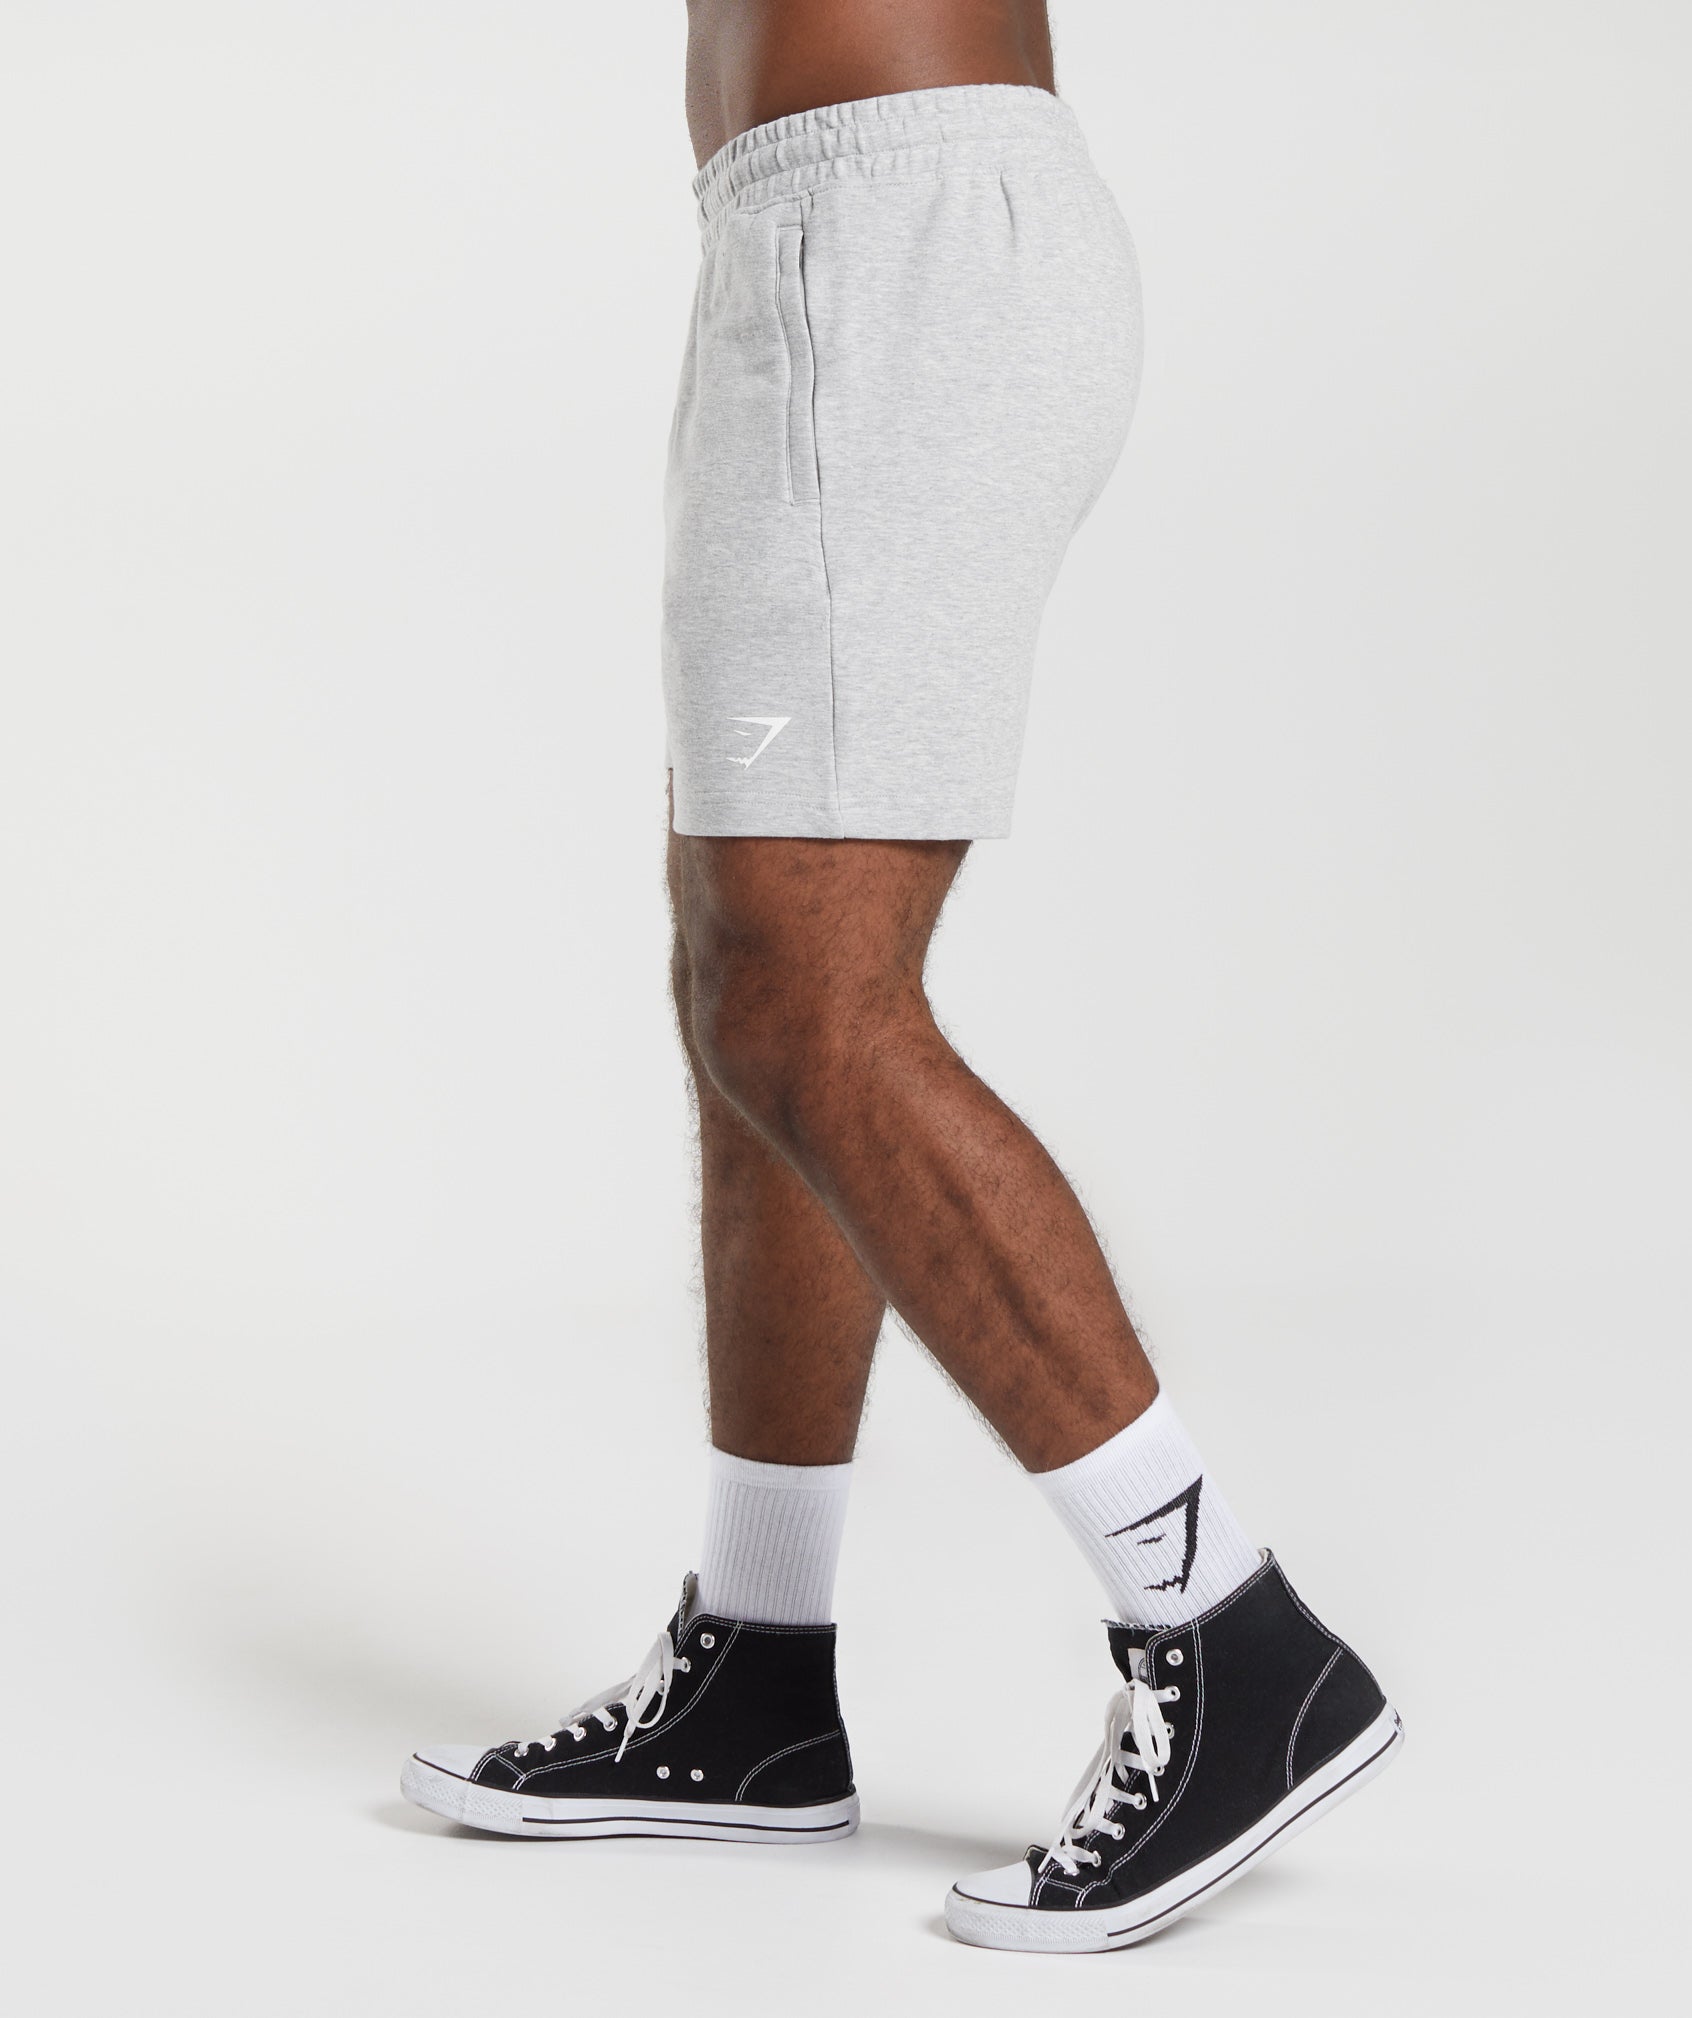 React 7" Shorts in Light Grey Core Marl